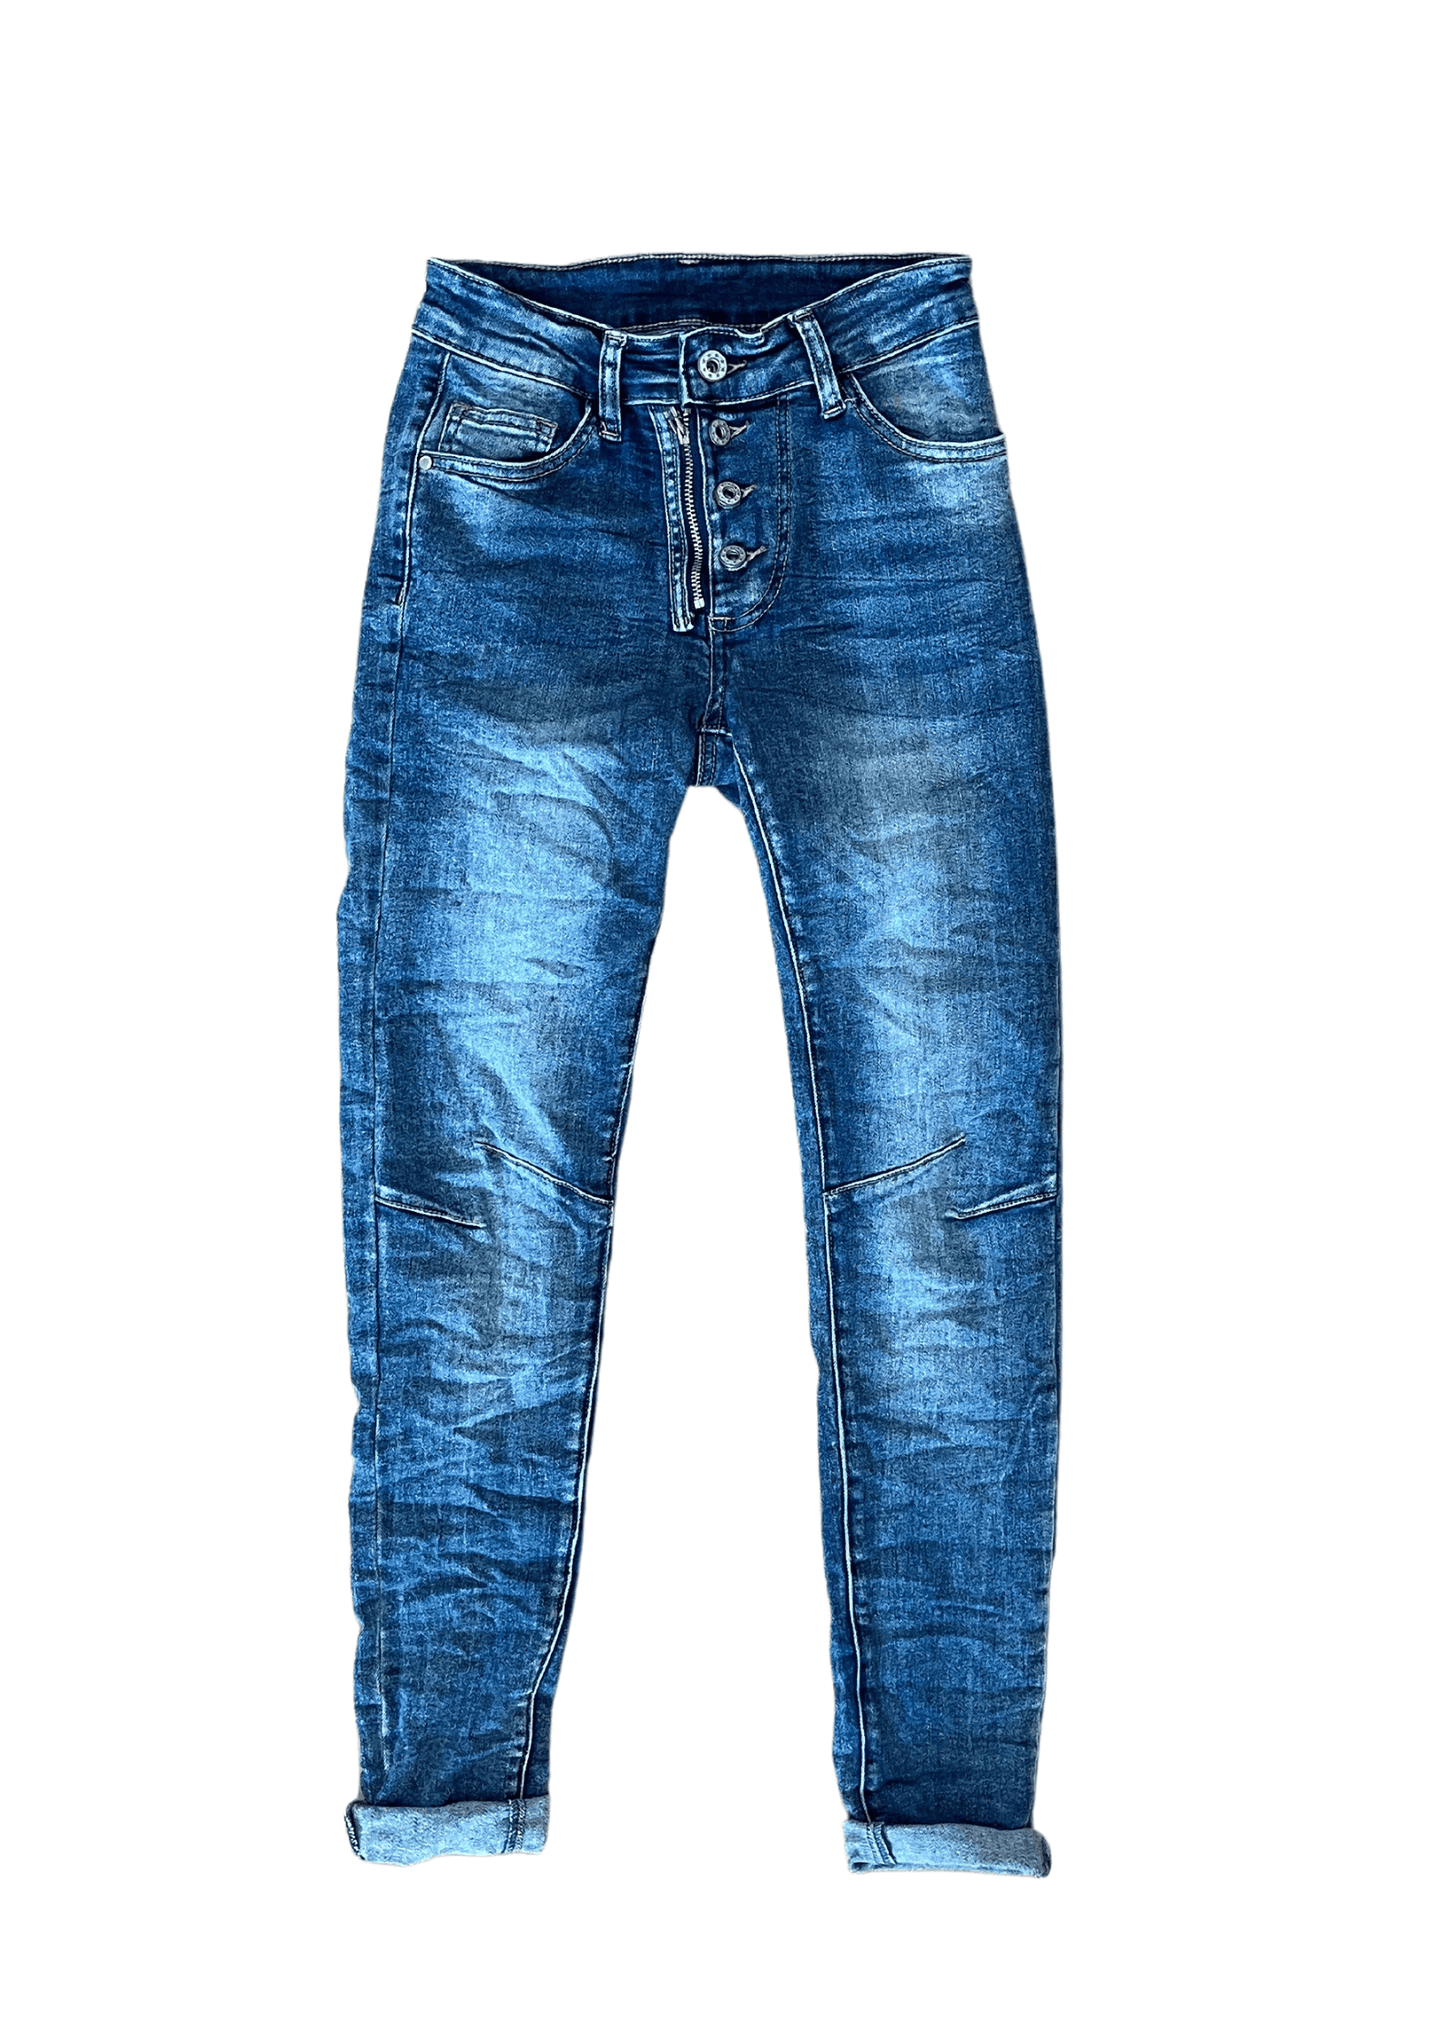 Melly & Co Skinny Jeans | Denim